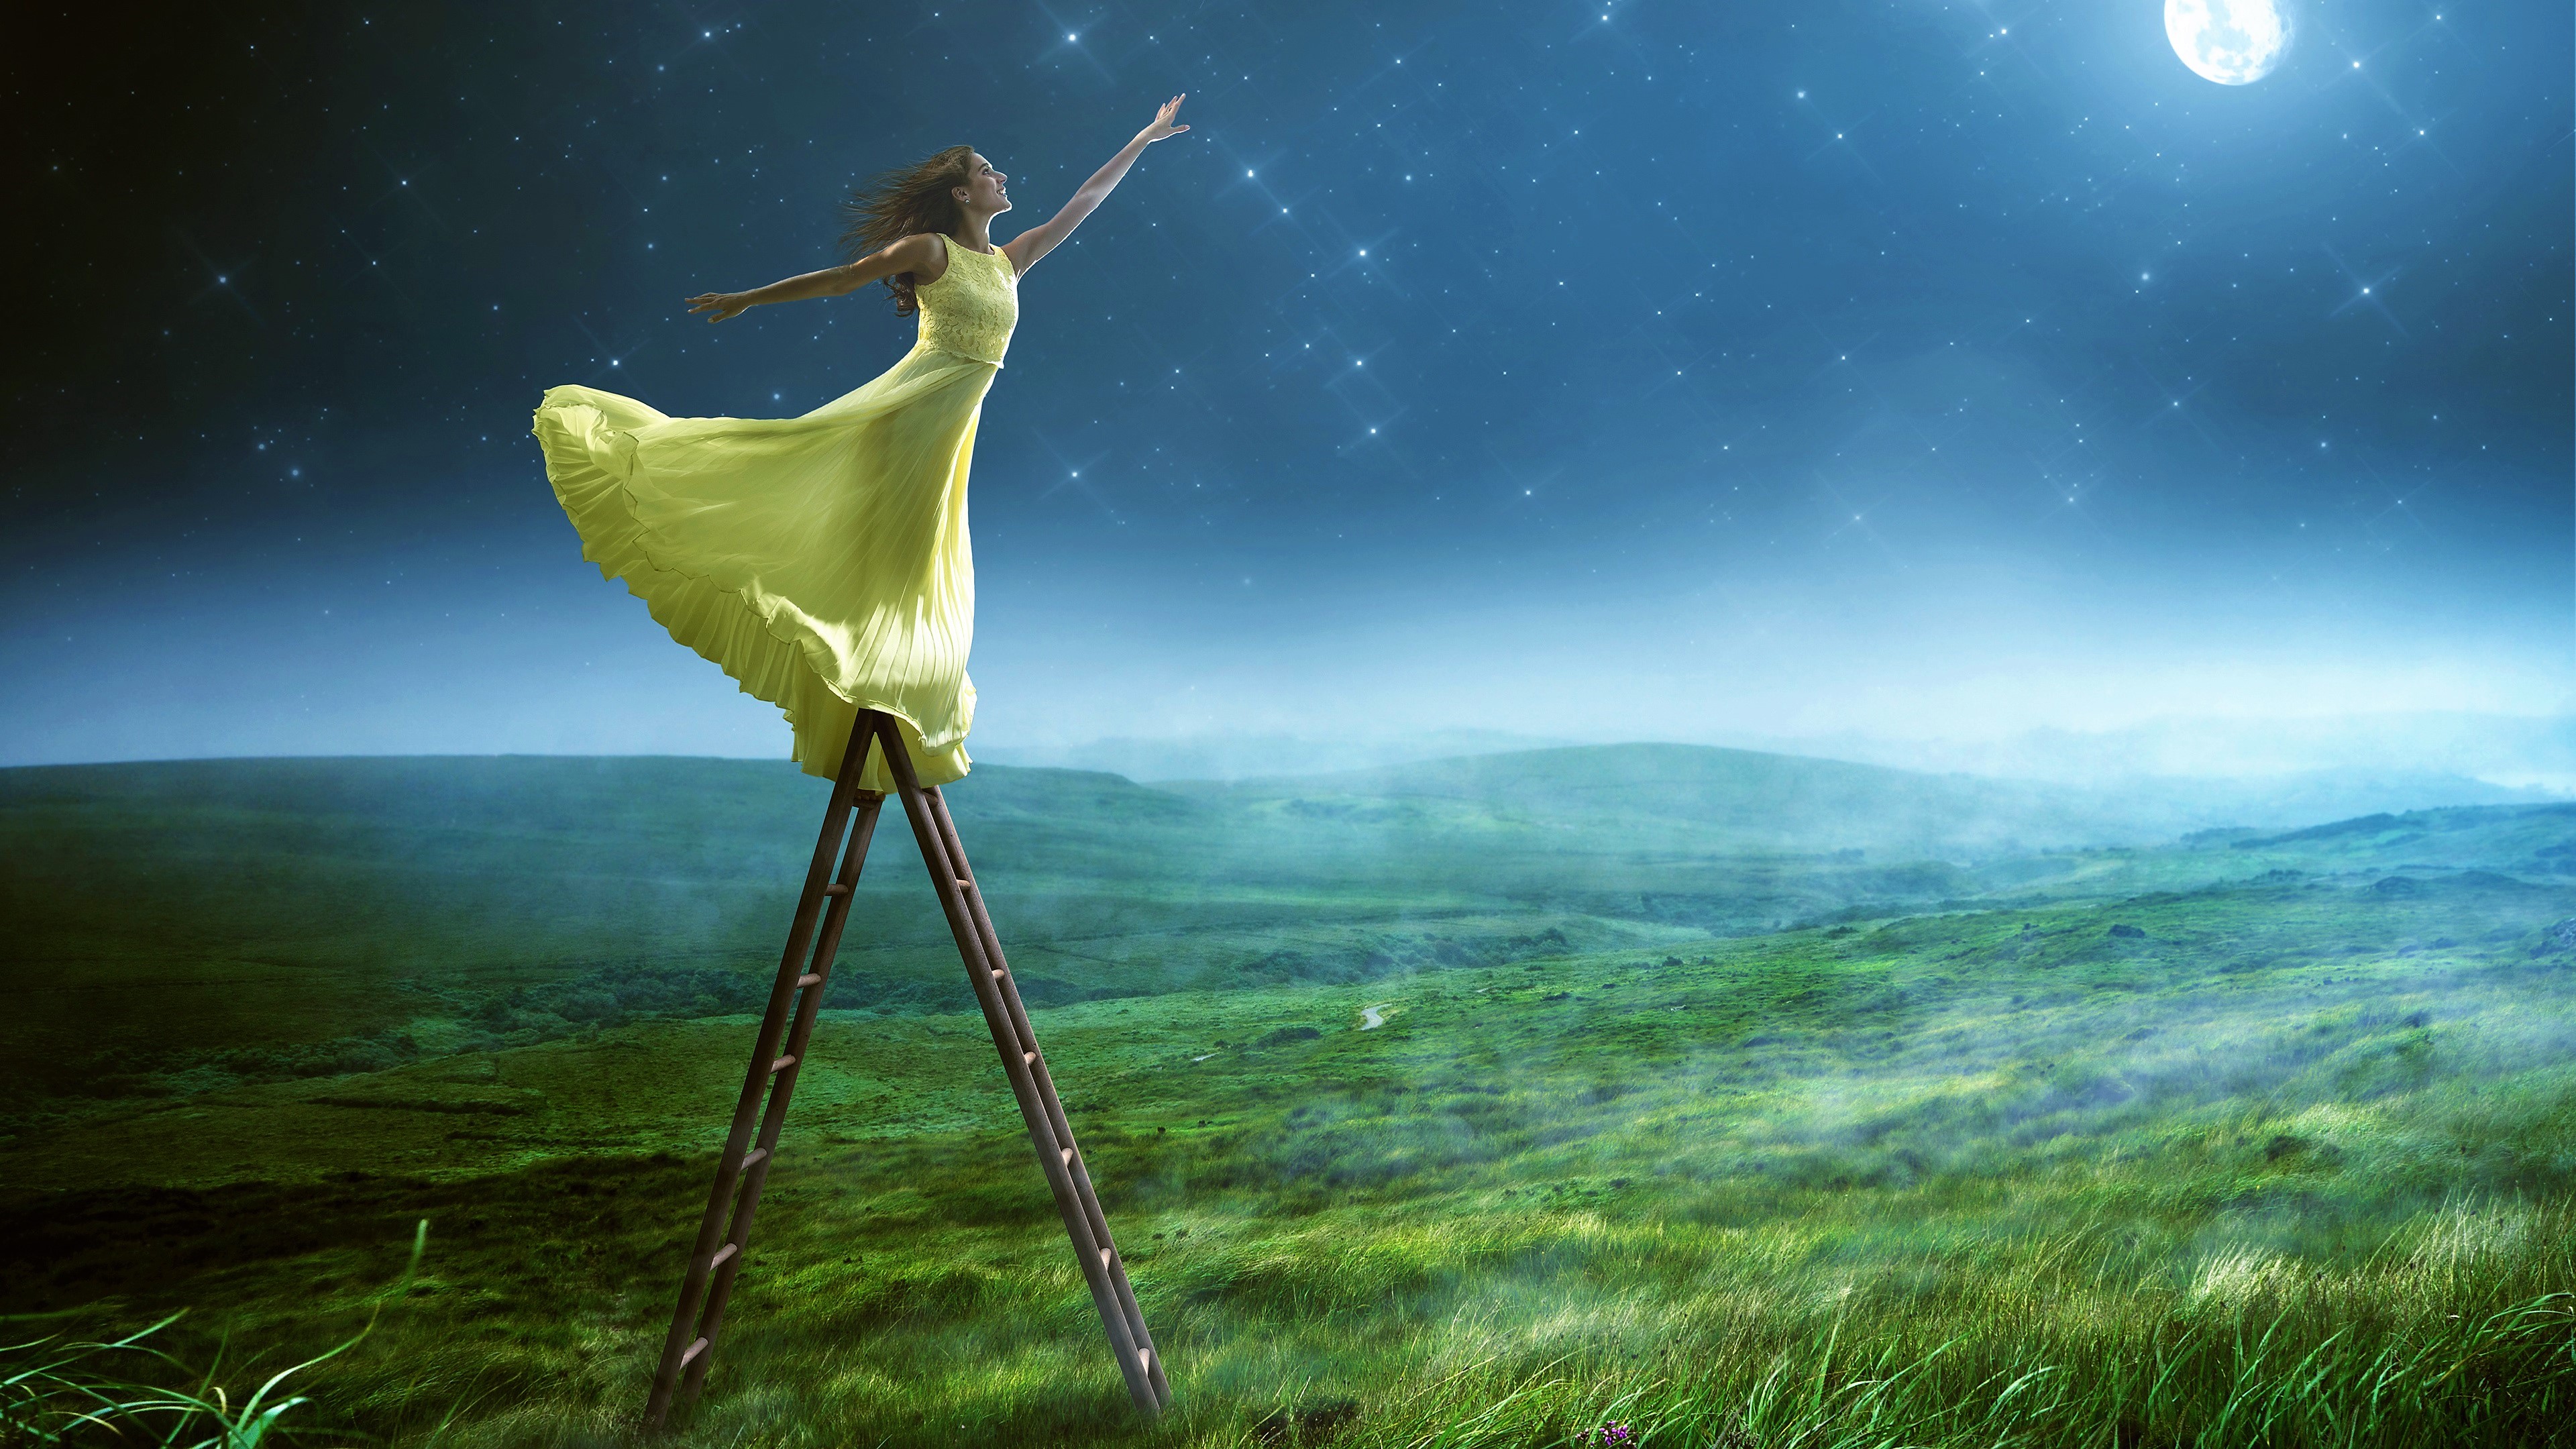 ladder, grass, dress, moon, fantasy, artistic High Definition image